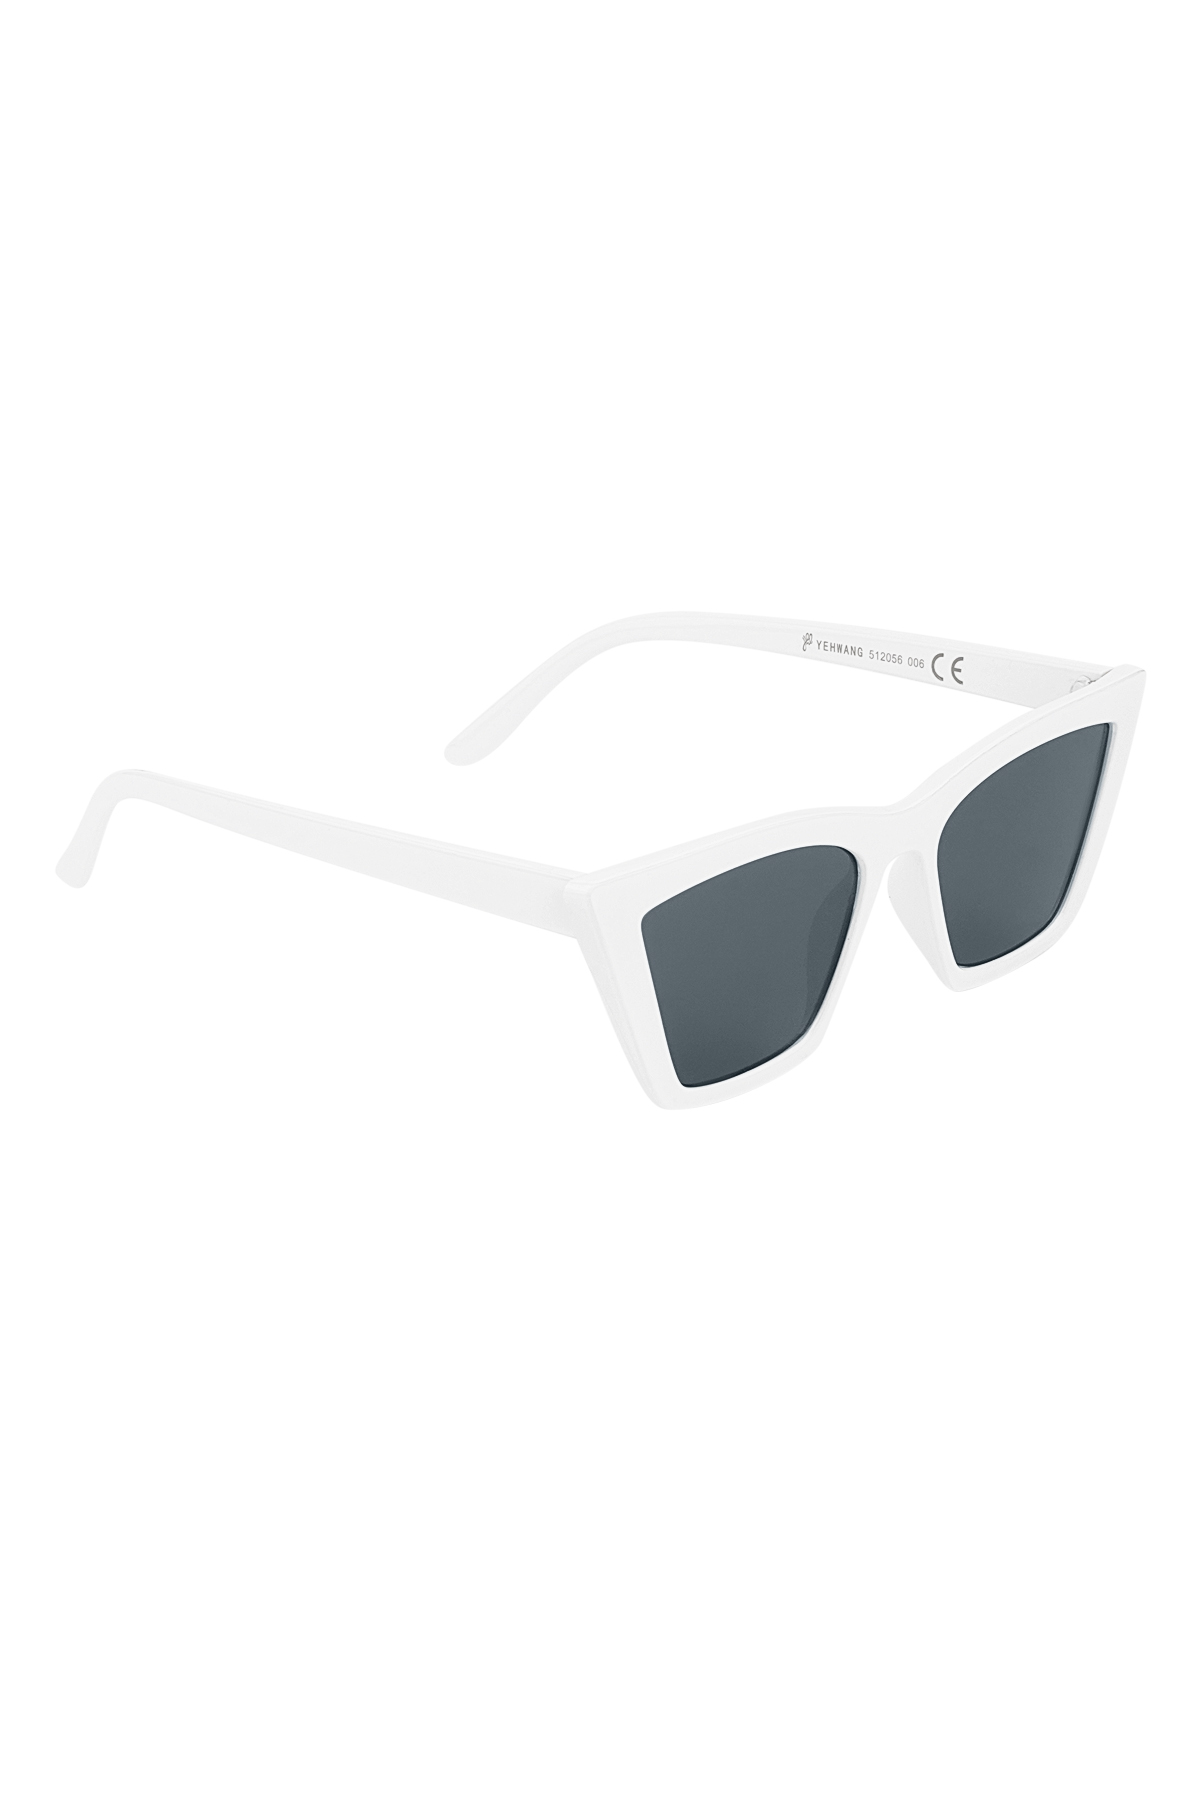 Monochrome cat eye sunglasses - black and white